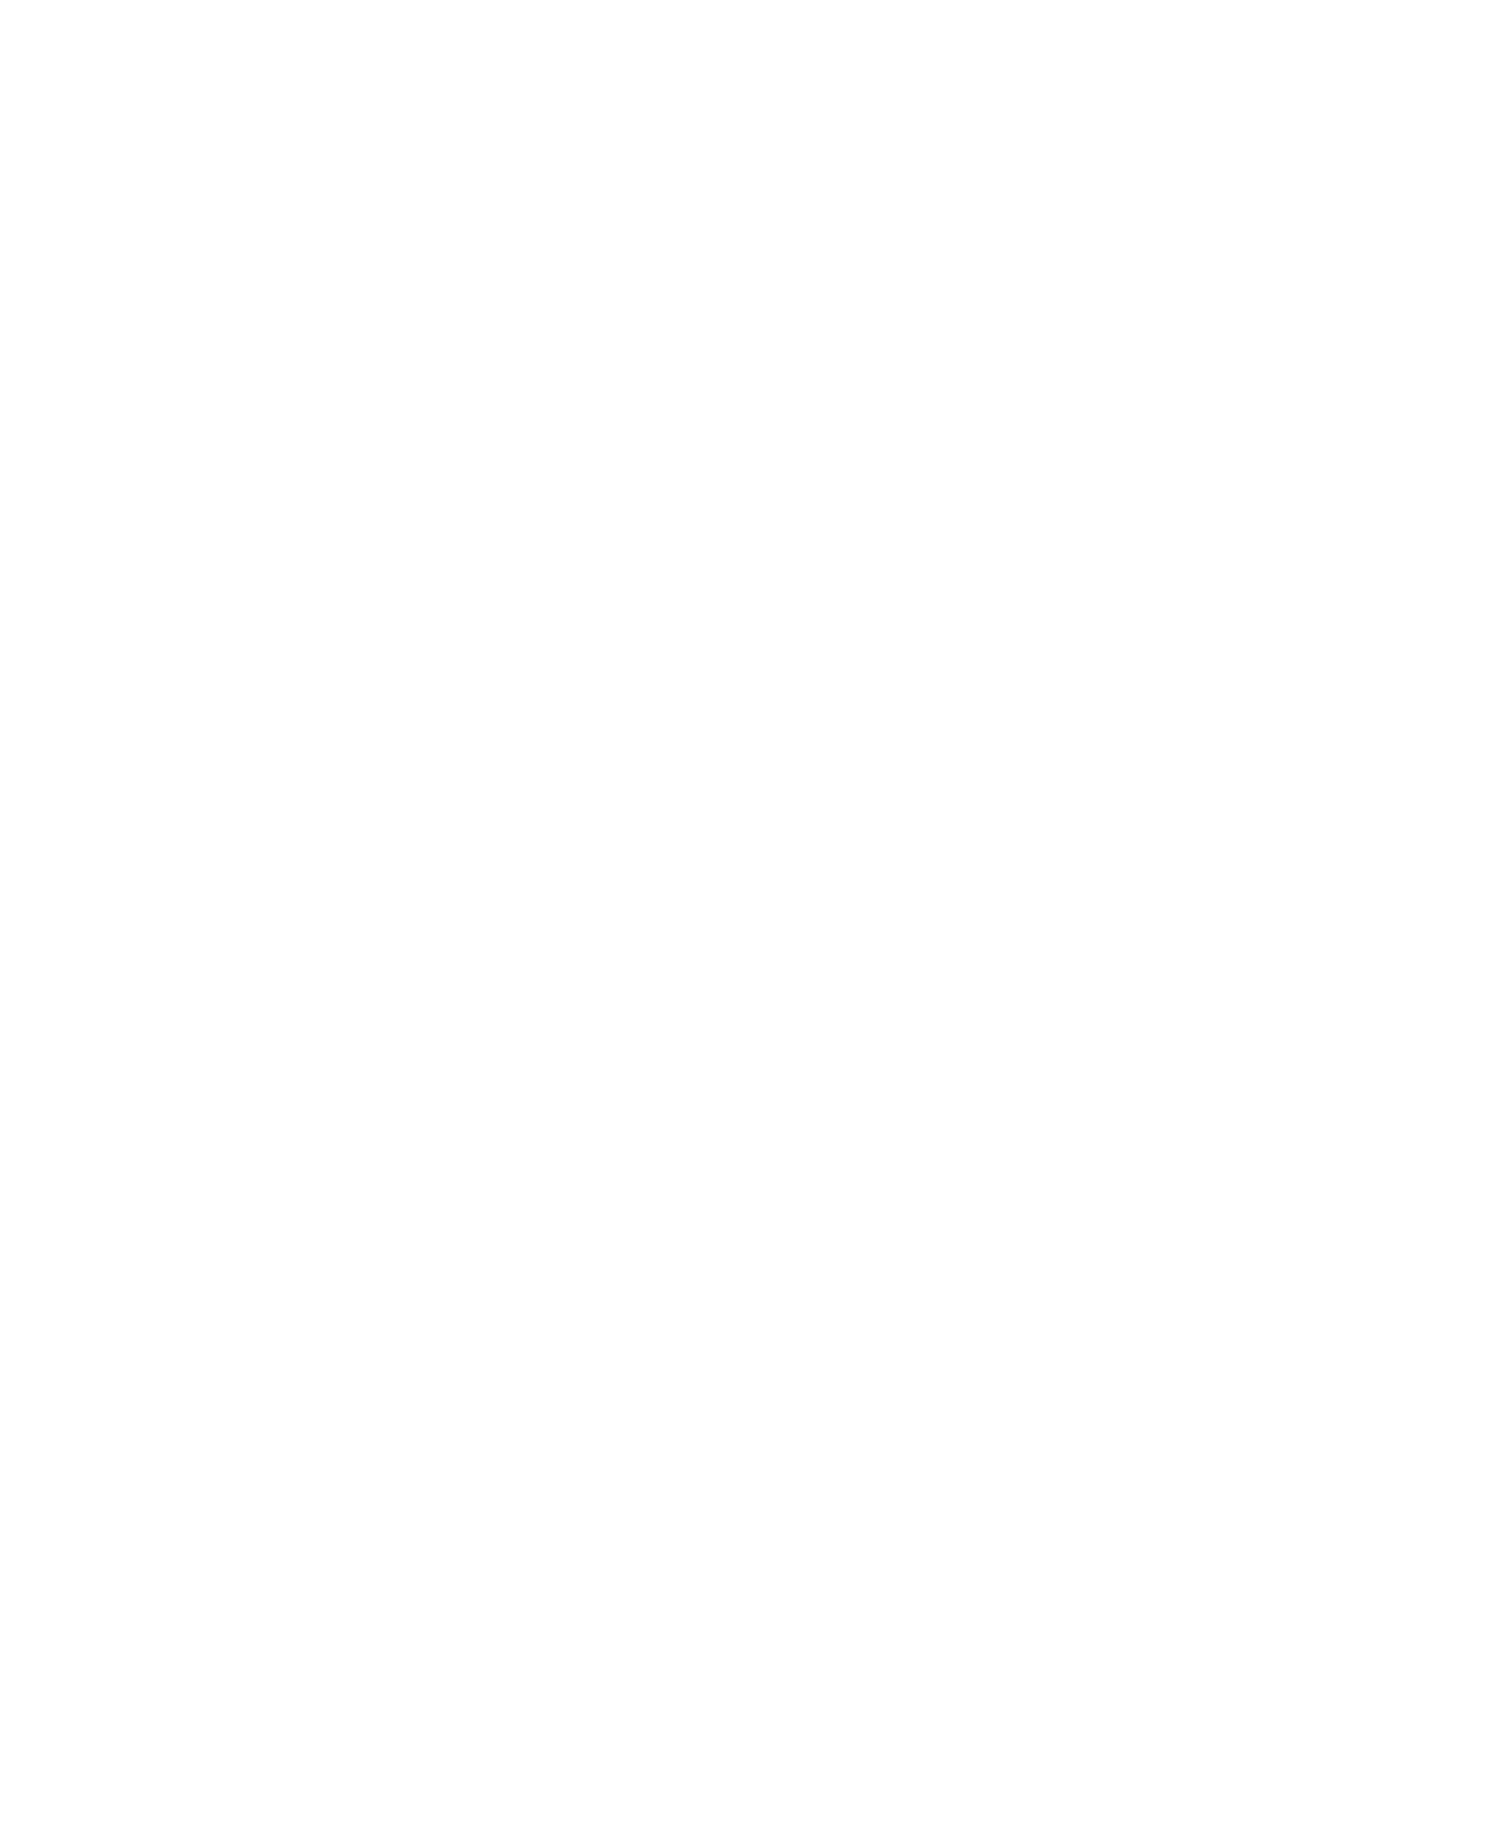 Black Lives of DSM